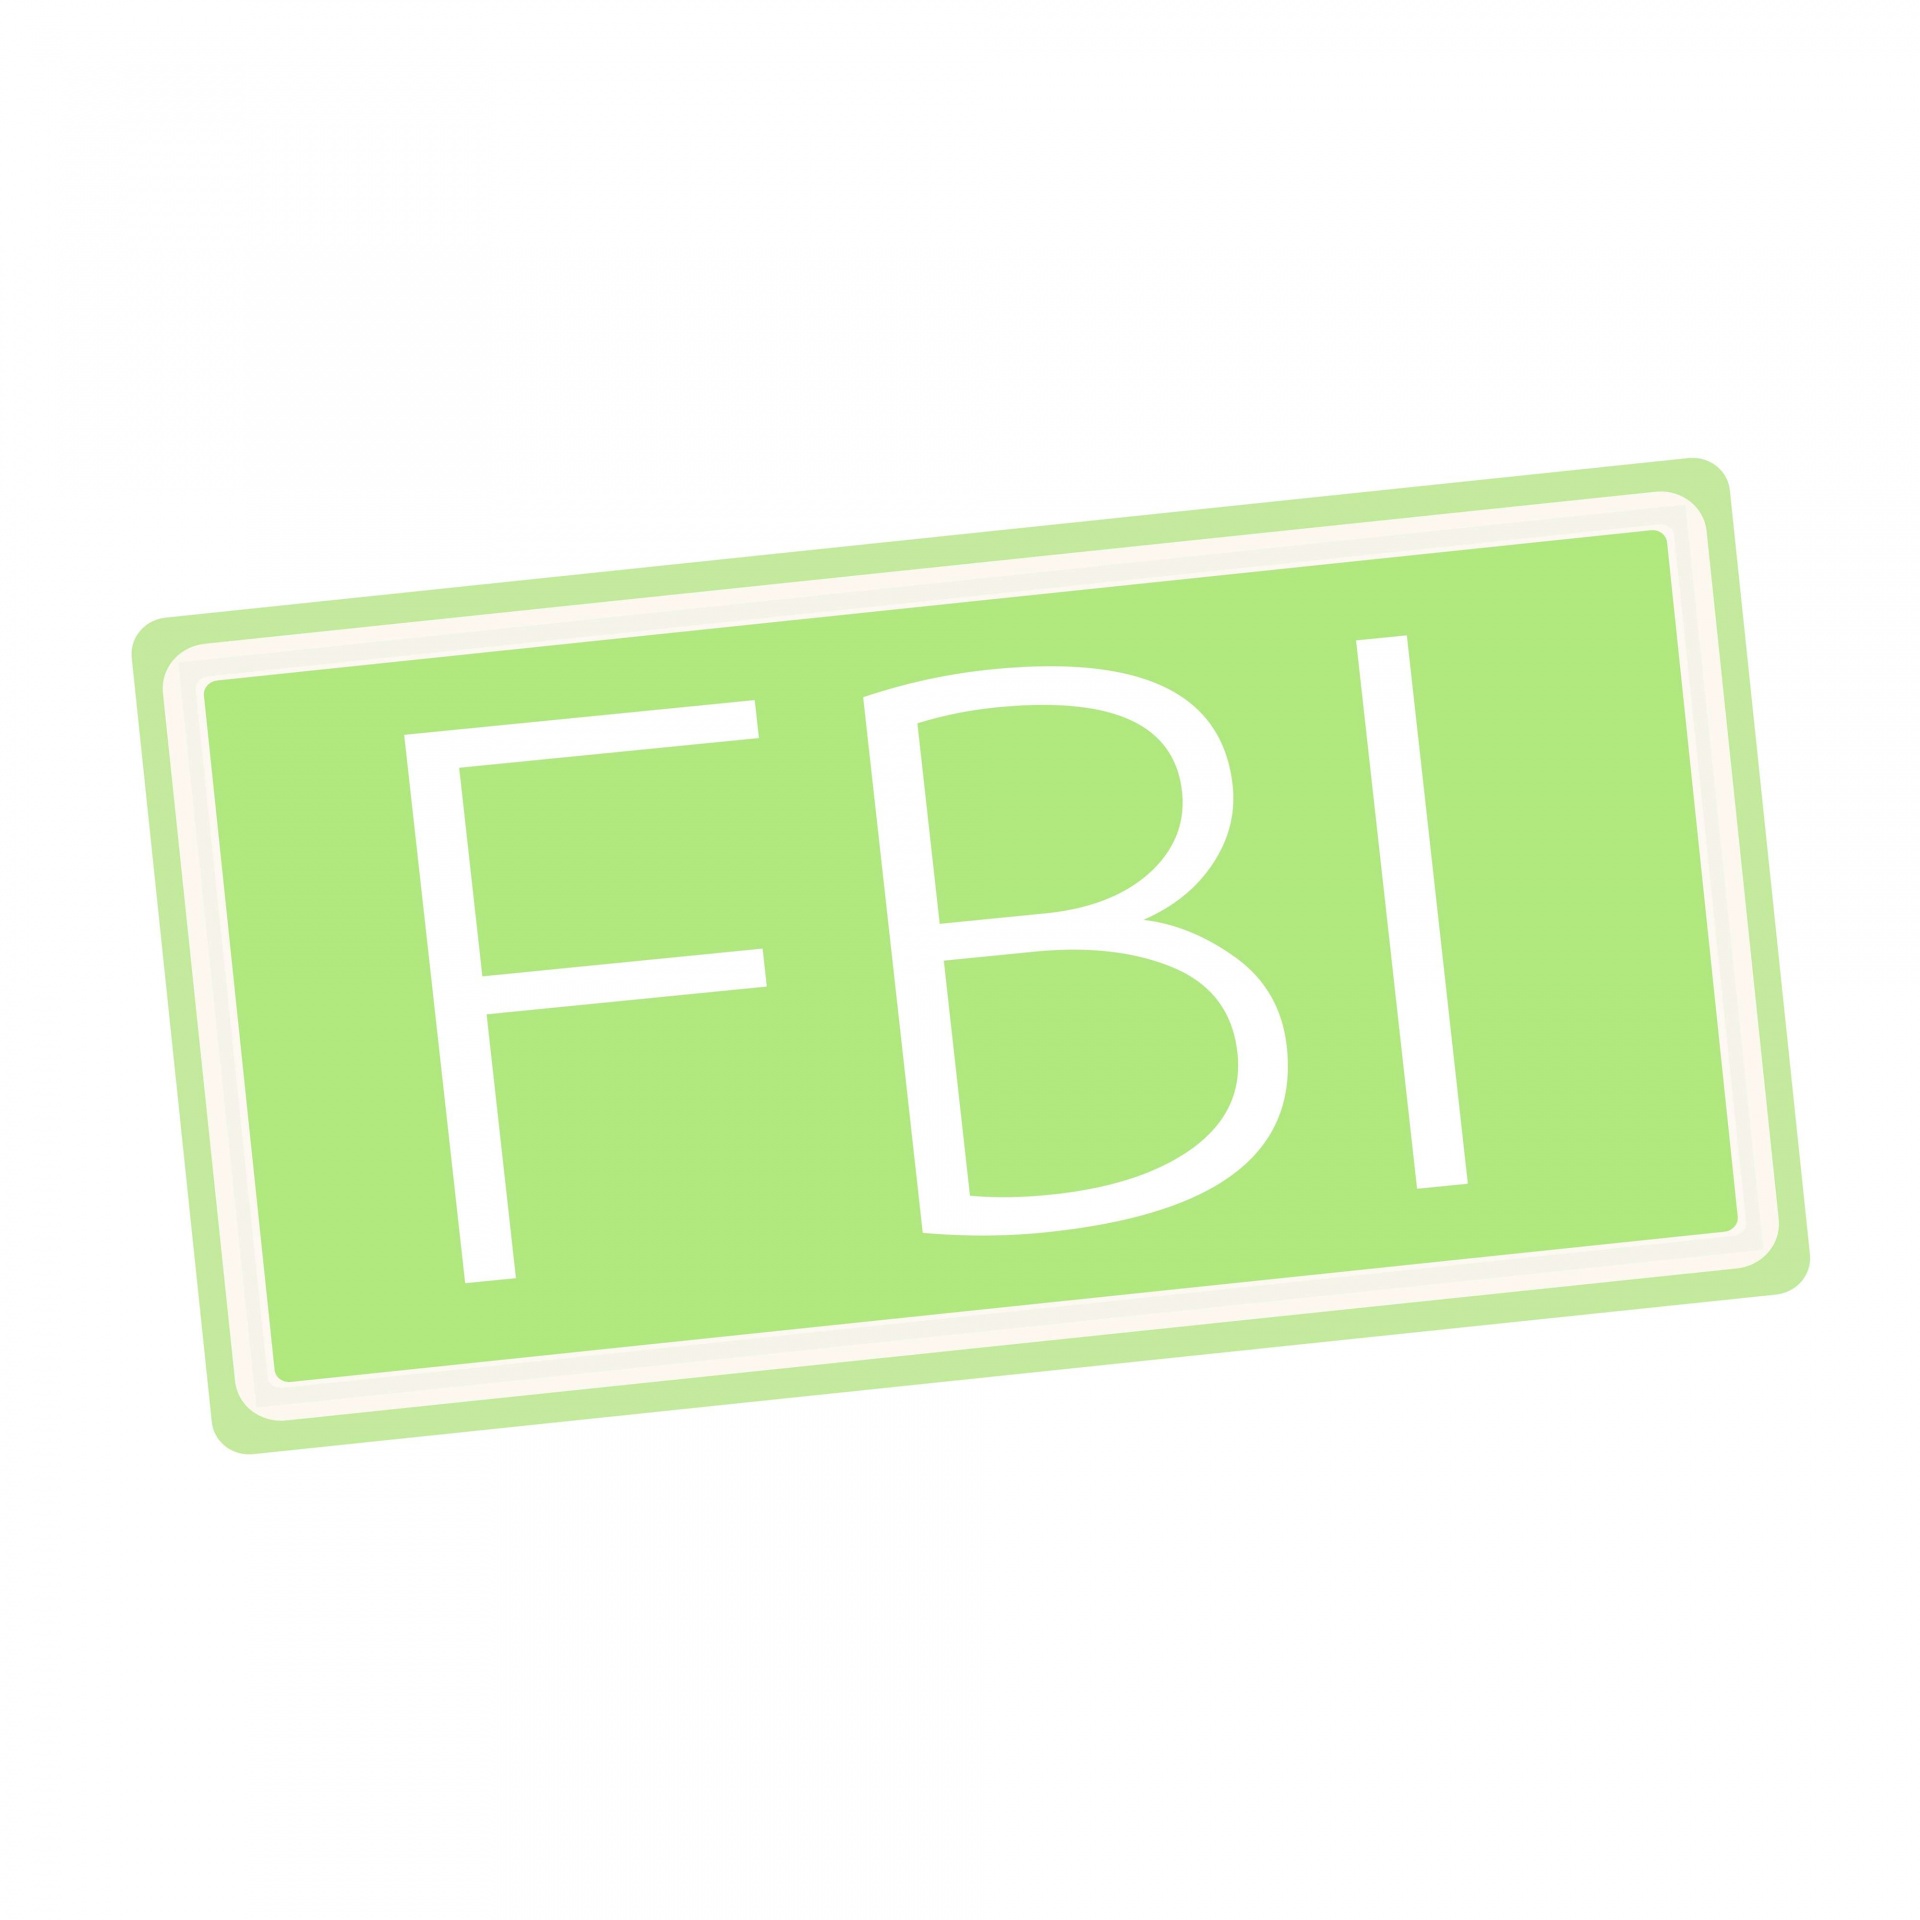 Texto del sello blanco del FBI en verde